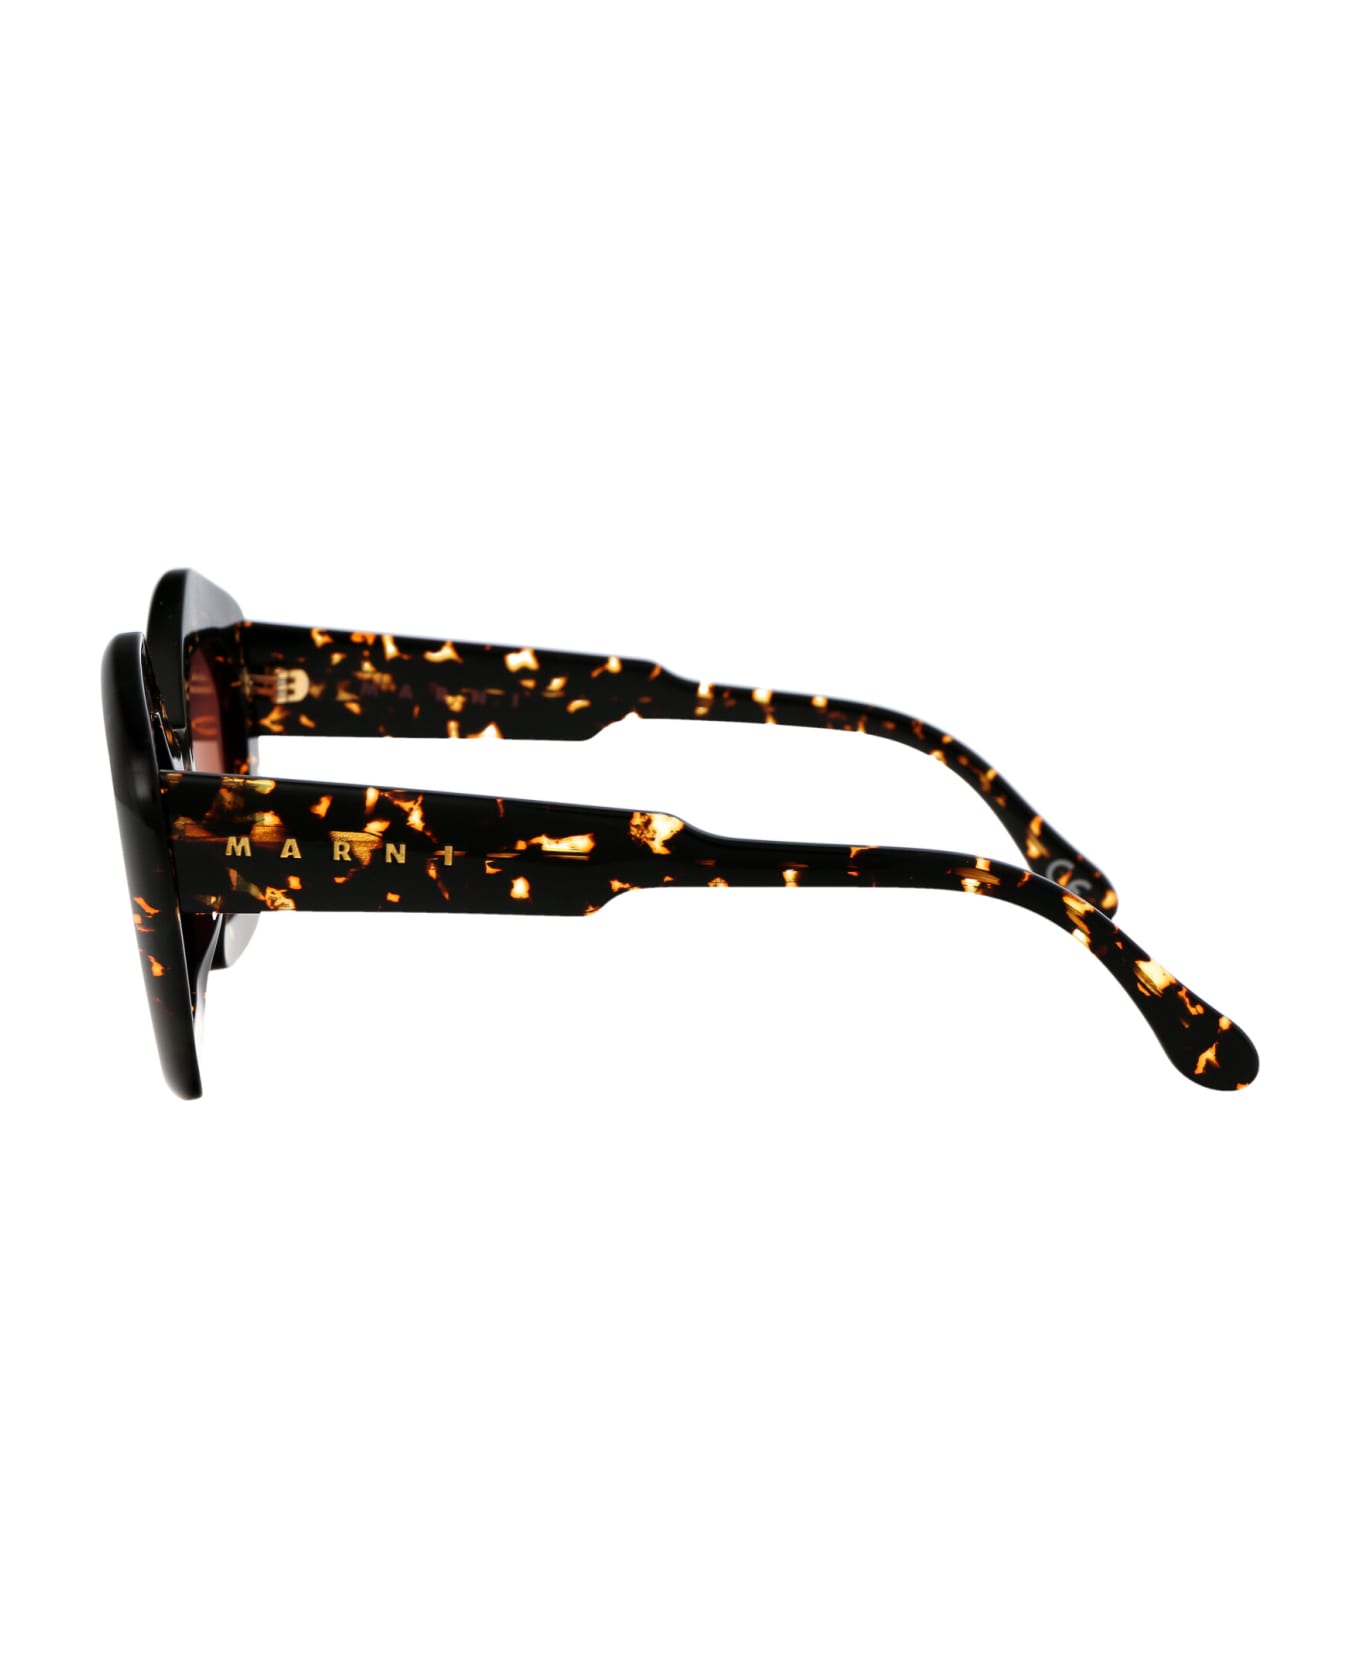 Marni Eyewear Laughing Waters Sunglasses - HAVANA ROSSA サングラス